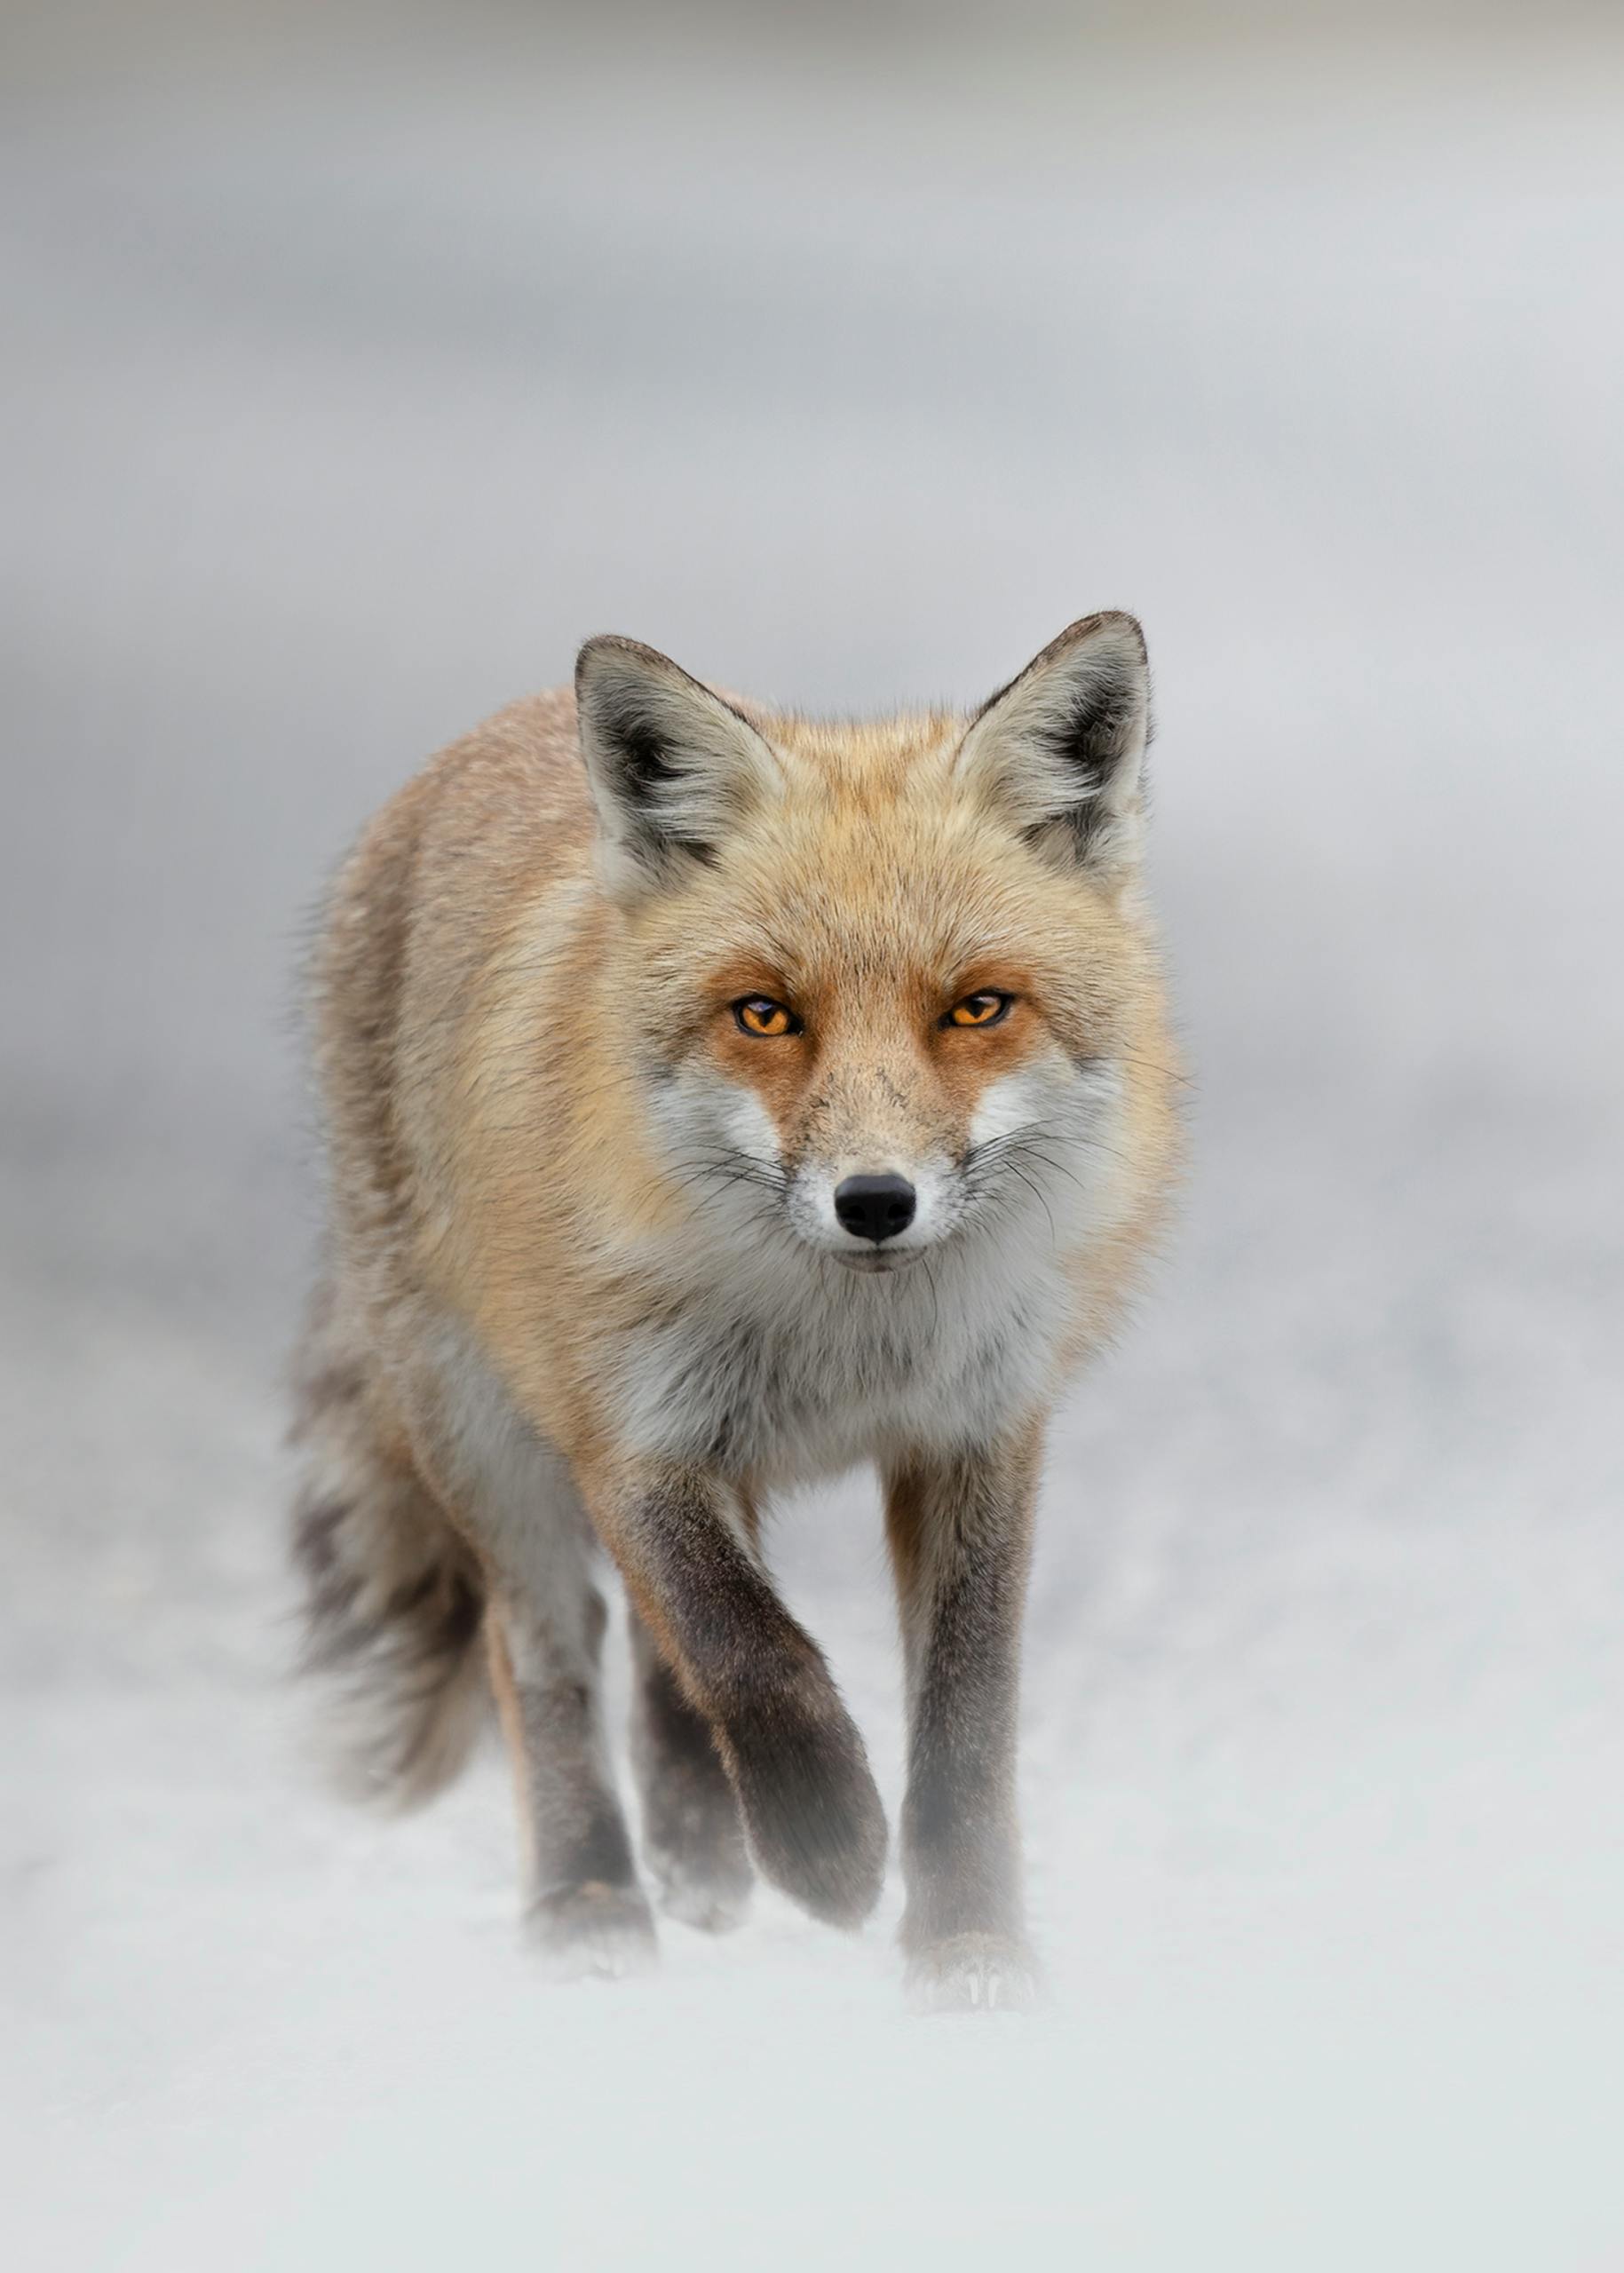 Close Up Photo of True Fox Animal at Daytime · Free Stock Photo